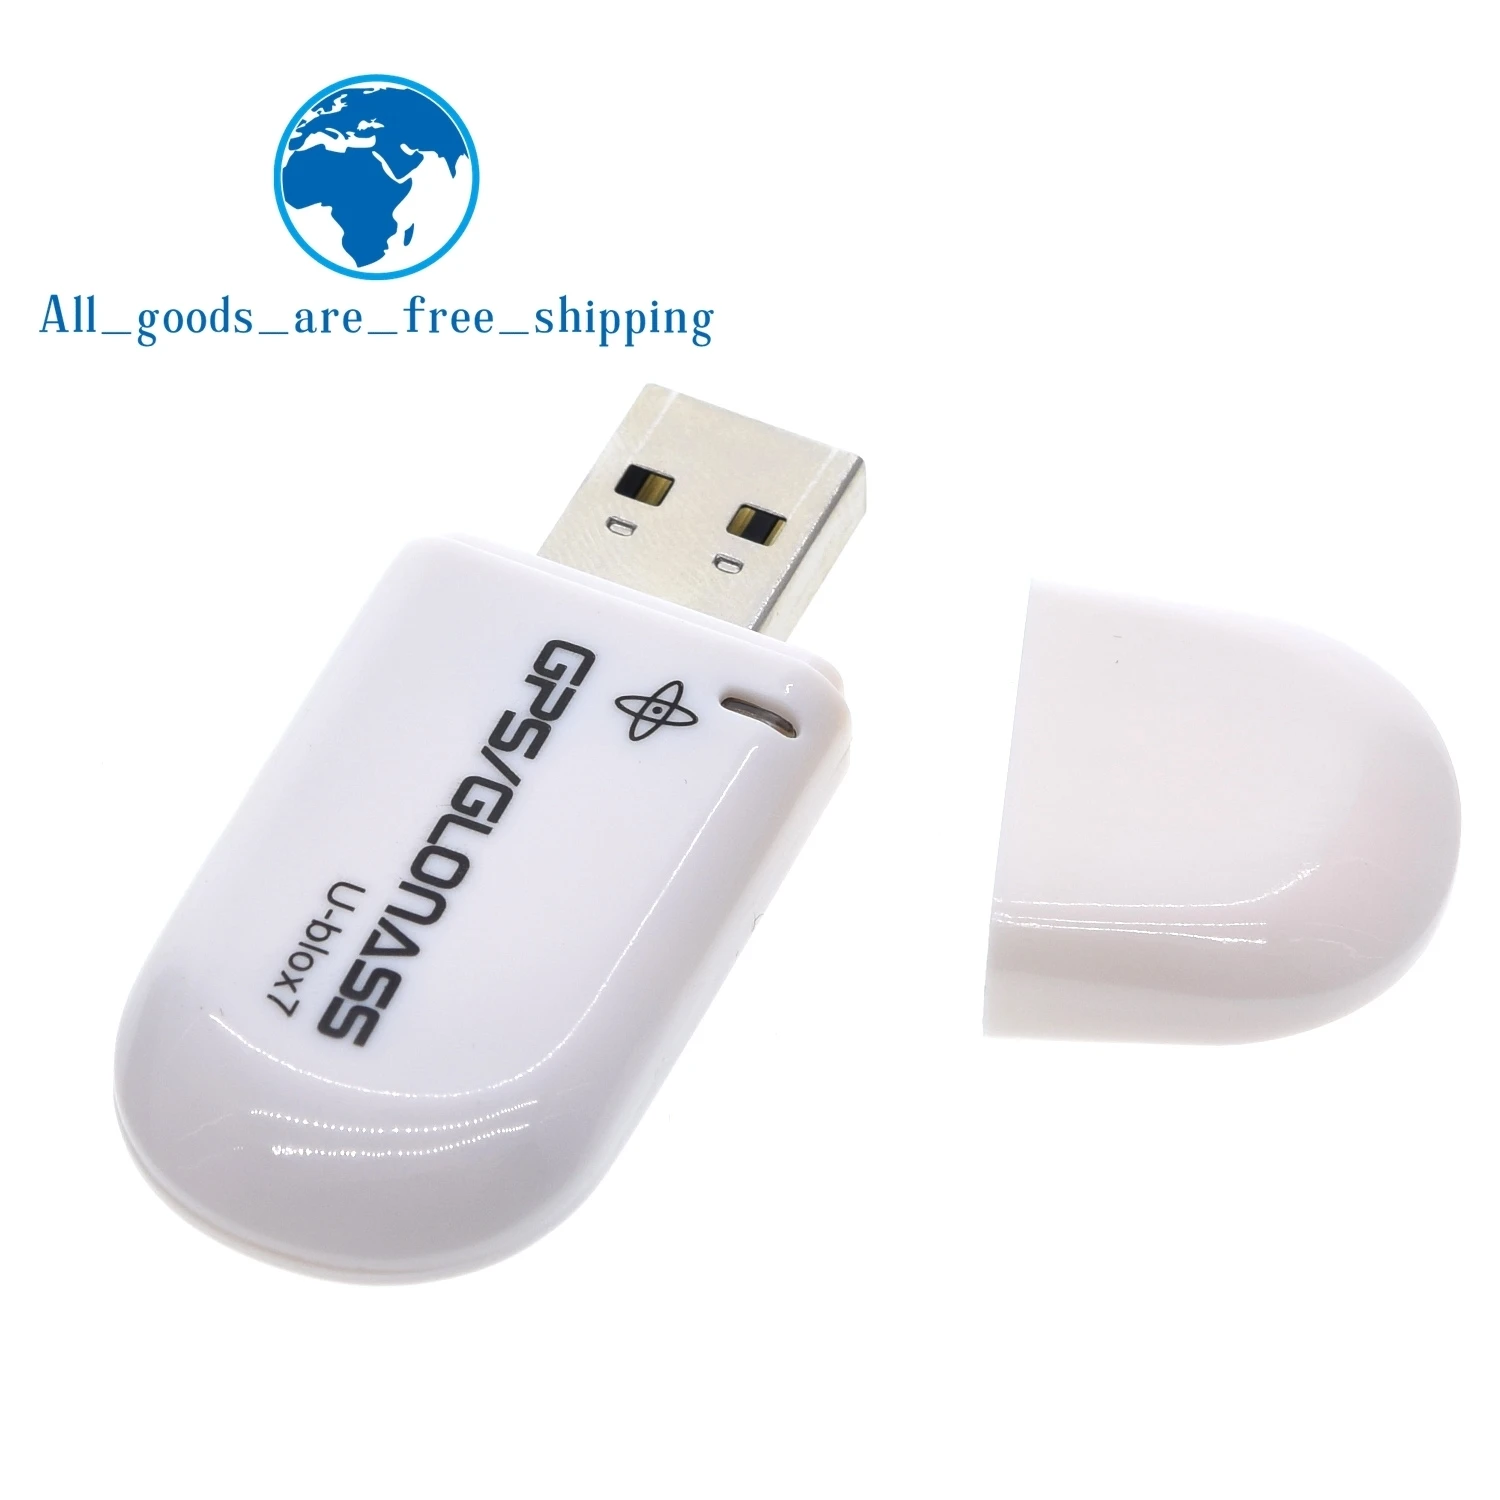 VK-172 GMOUSE USB GPS Receiver Glonass Support Windows 10/8/7/Vista/XP